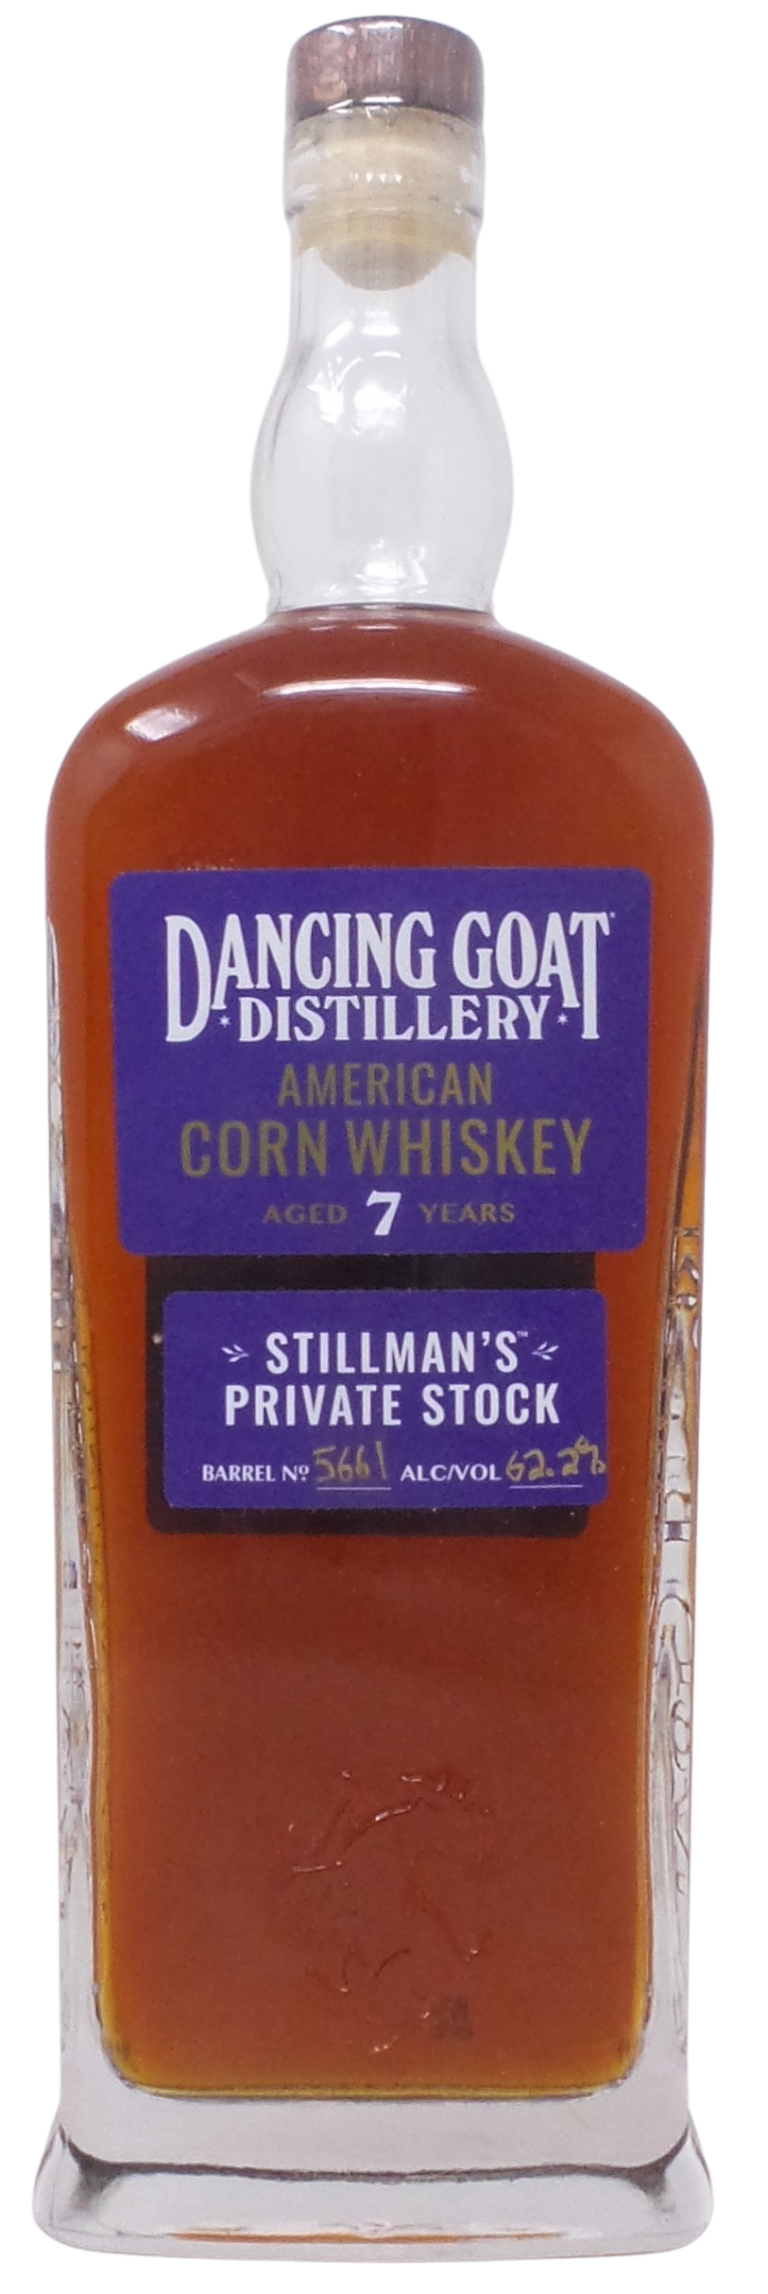 Dancing Goat Distillery Stillman’s Private Stock Corn Whiskey 